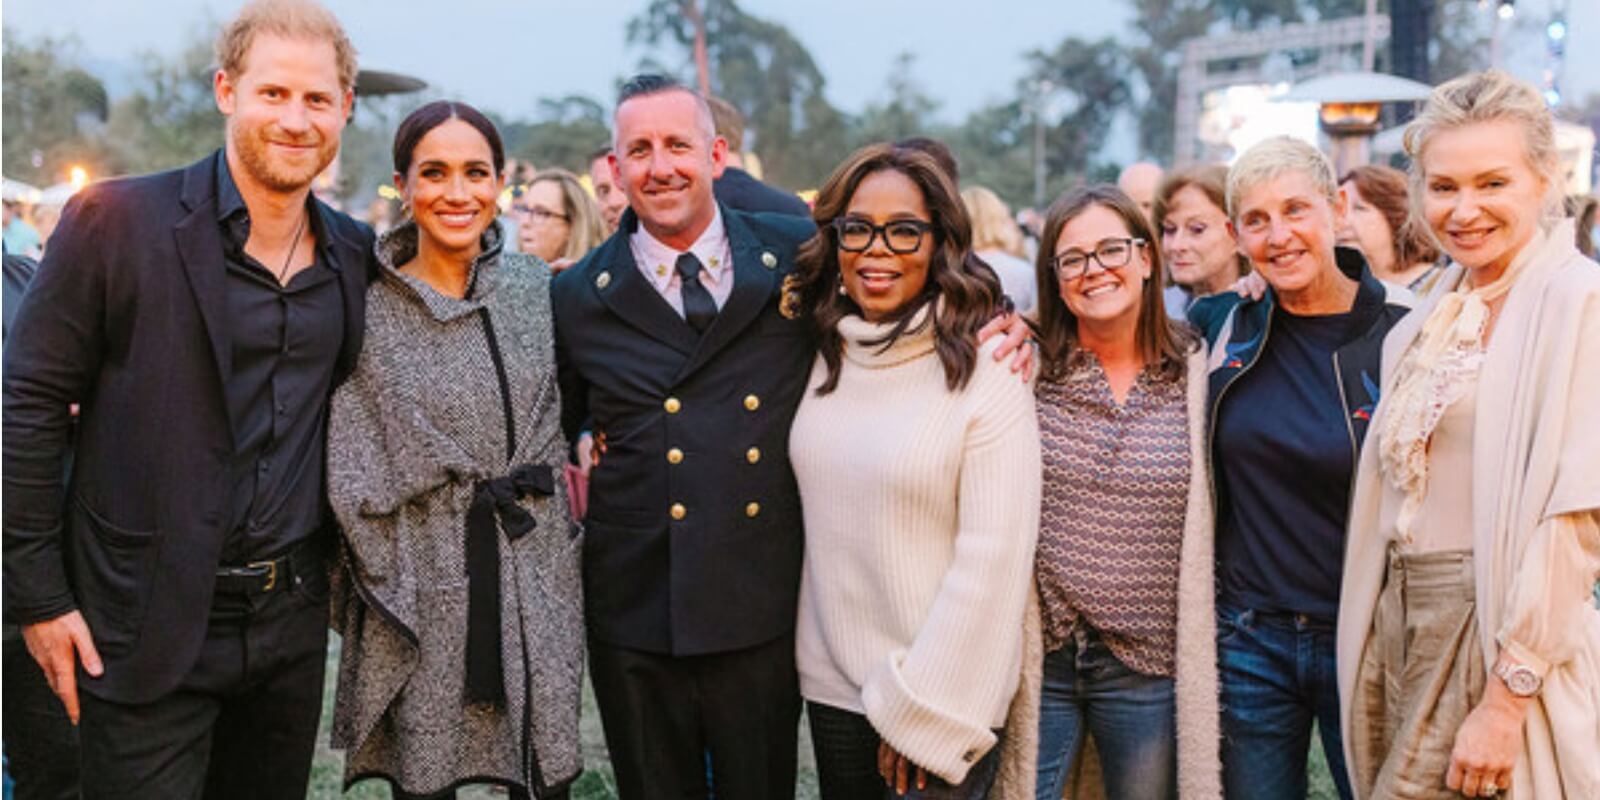 Prince Harry, Meghan Markle, Oprah Winfrey, Ellen DeGeneres and Portia DeRossi attend the One806 event in Santa Barbara, CA.